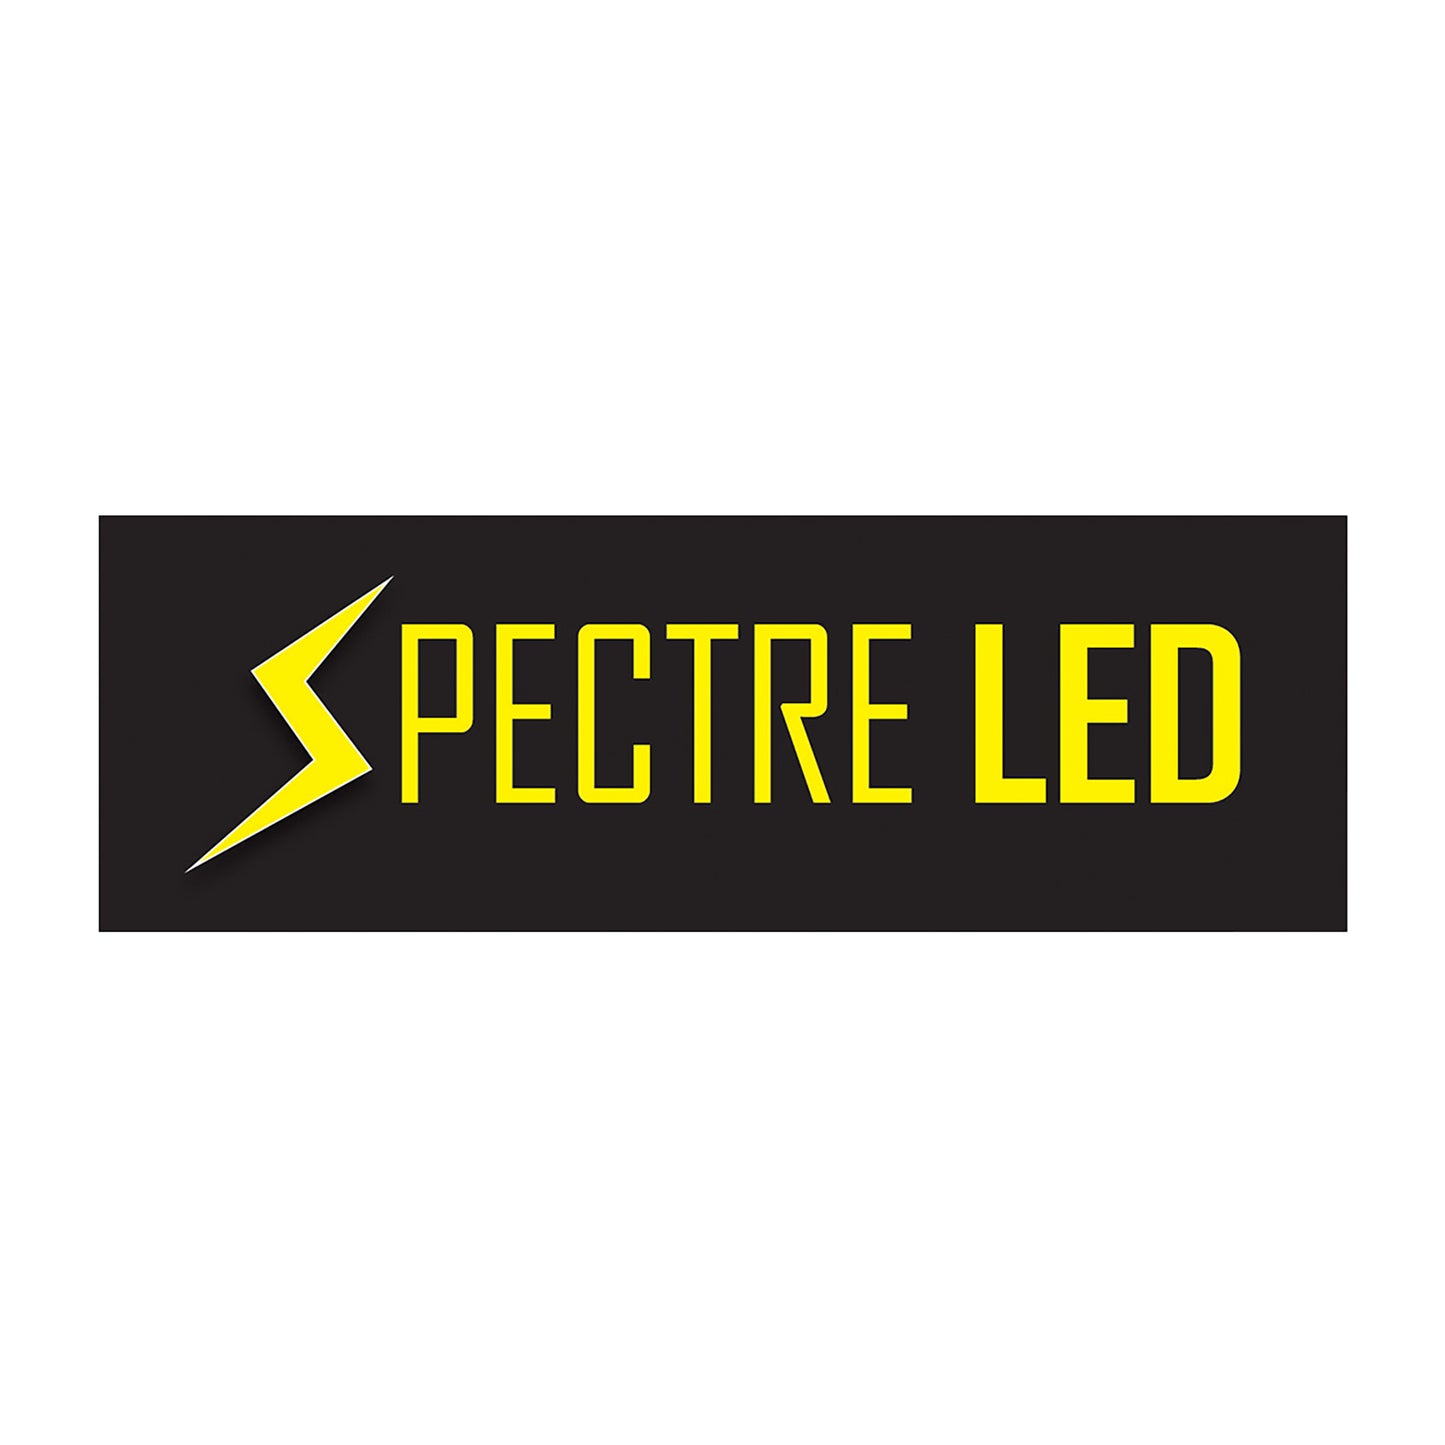 Spectre LED Poster